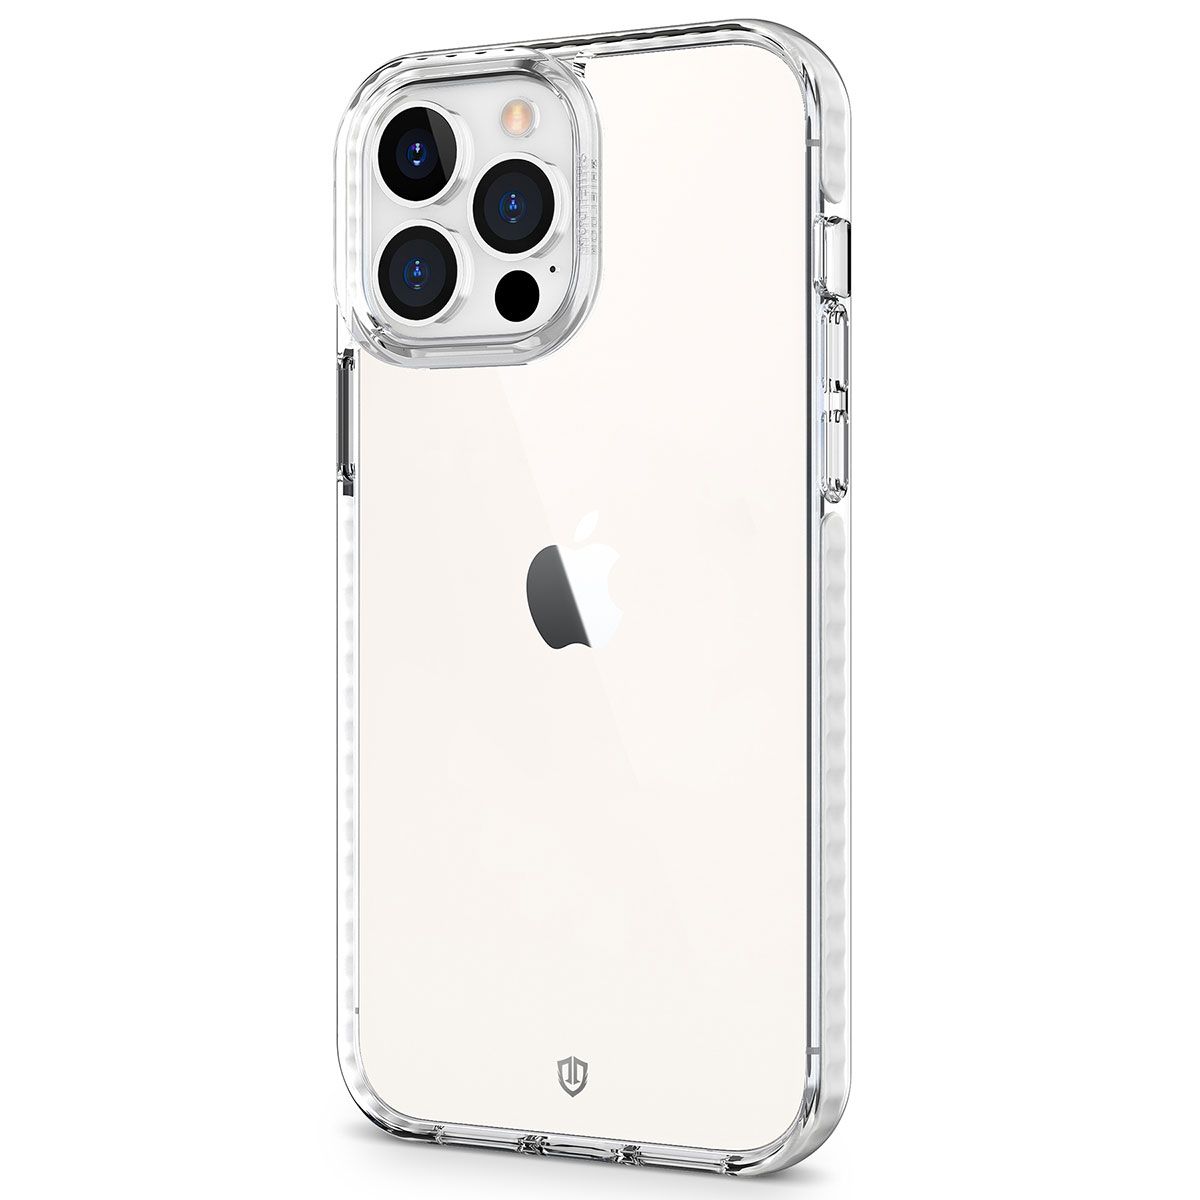 Clear & white phone case